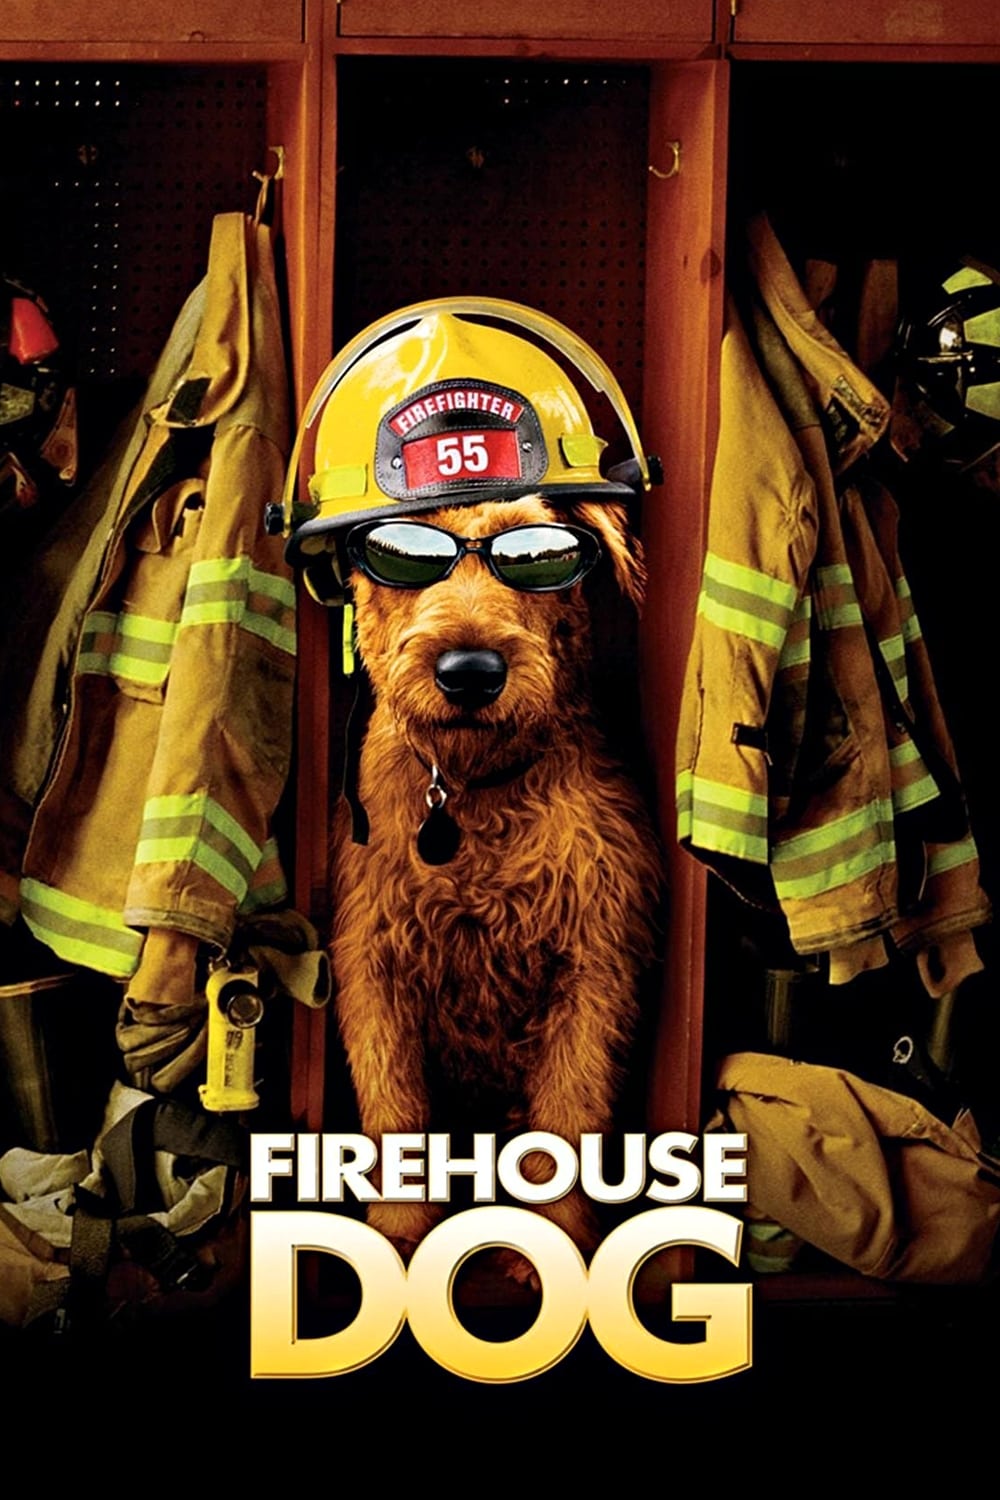 Firehouse Dog